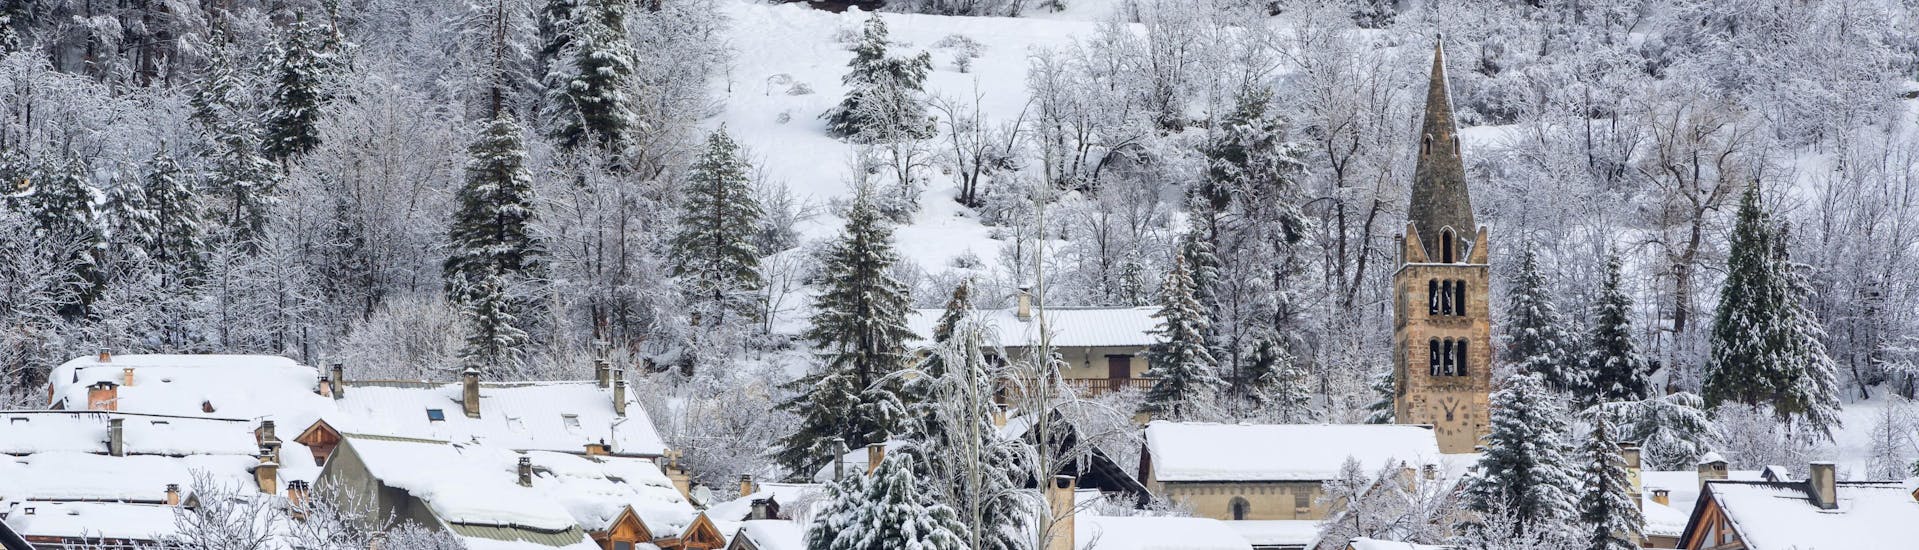 Small village of Serre-Chevalier Villeneuve covered in snow.